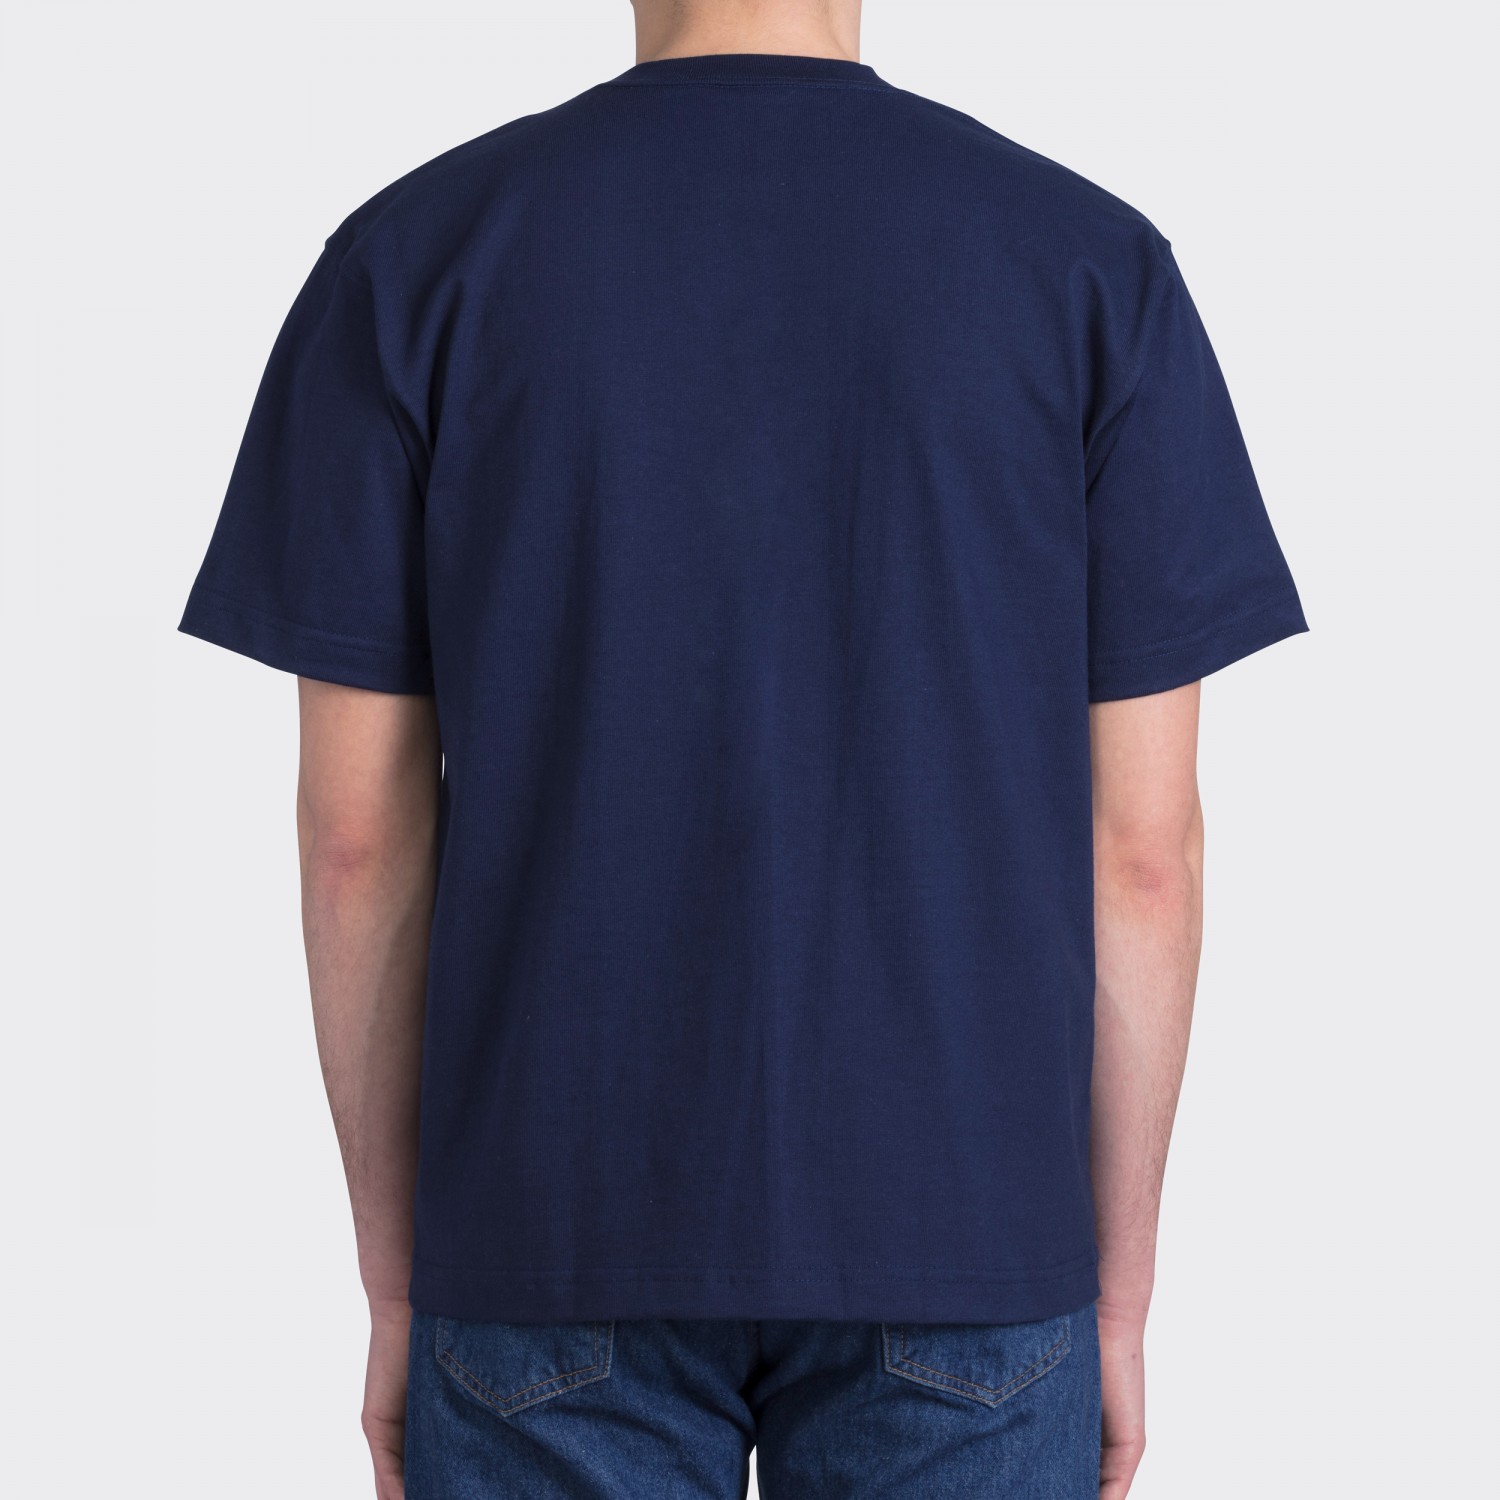 Camber USA : Pocket T-shirt : Navy